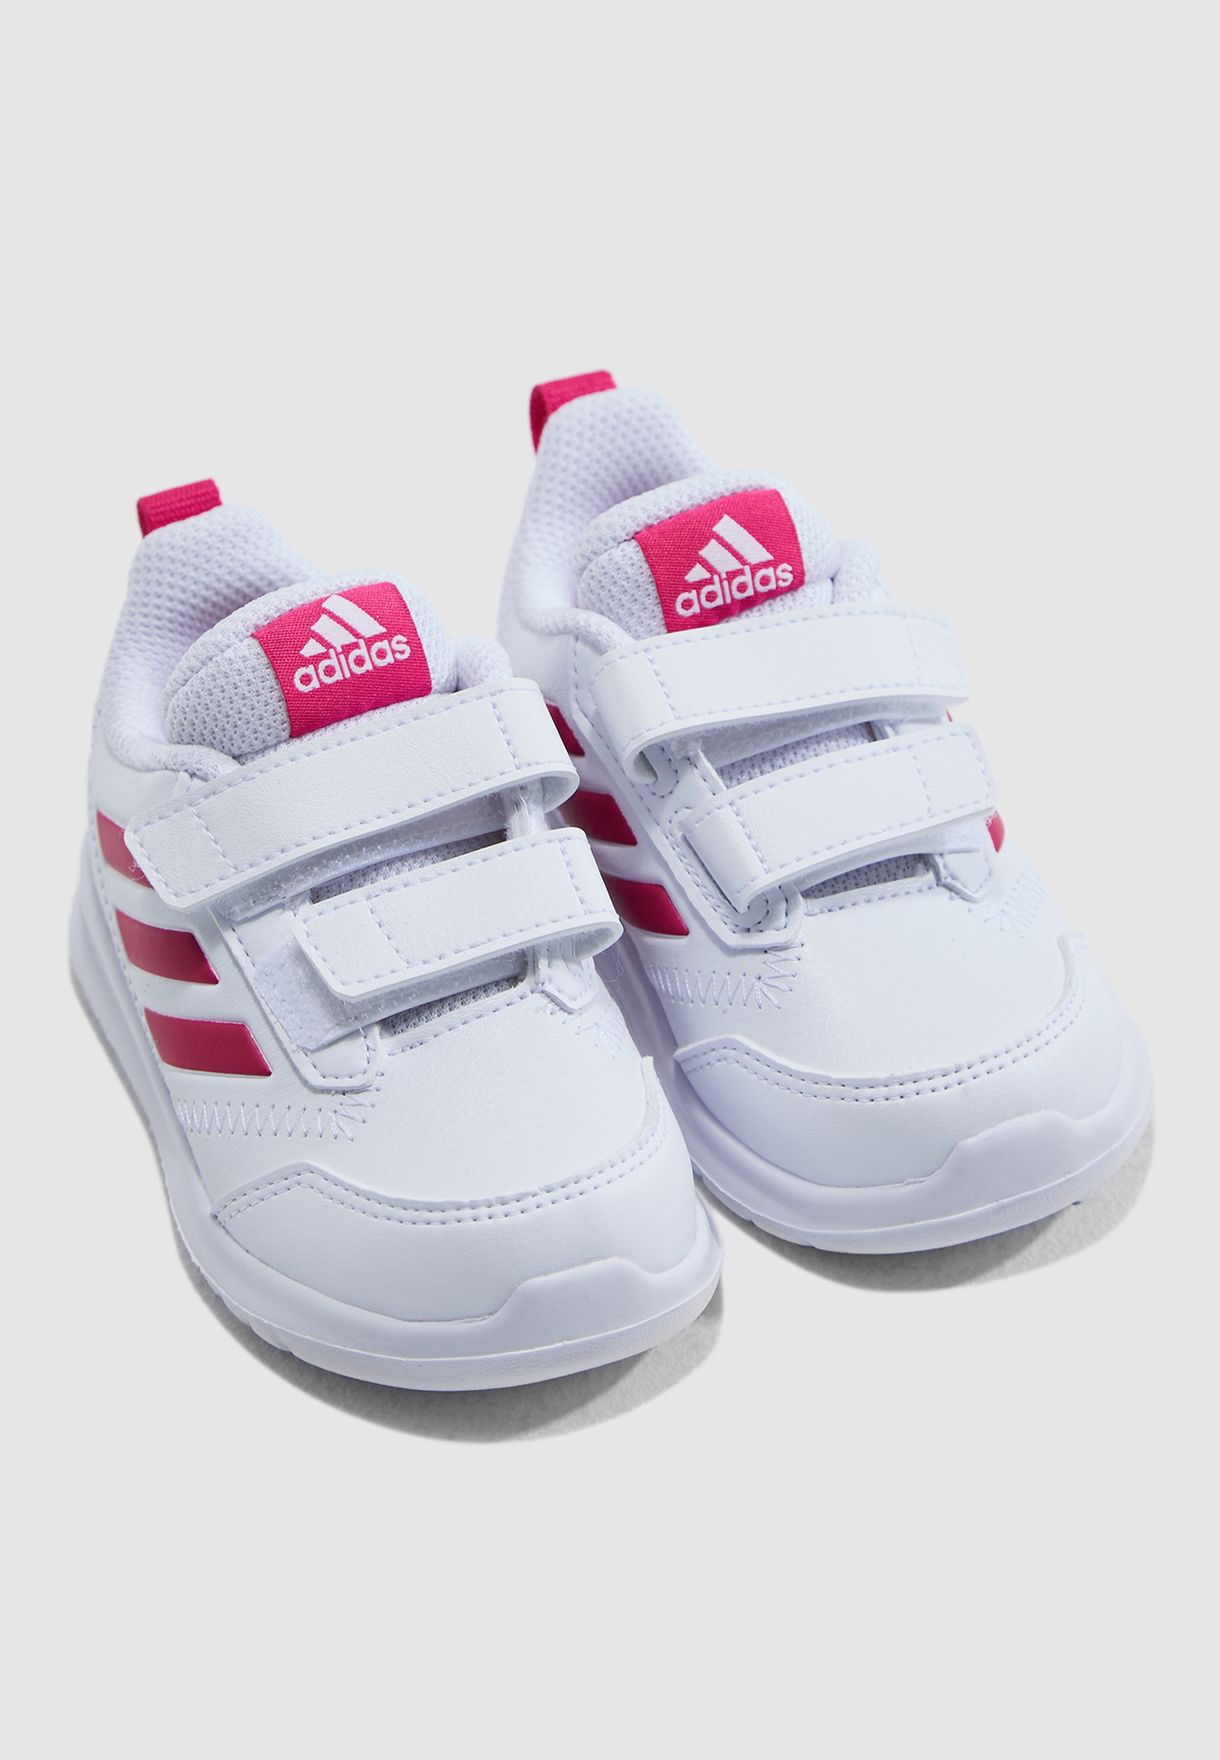 adidas altarun infant & toddler sneaker